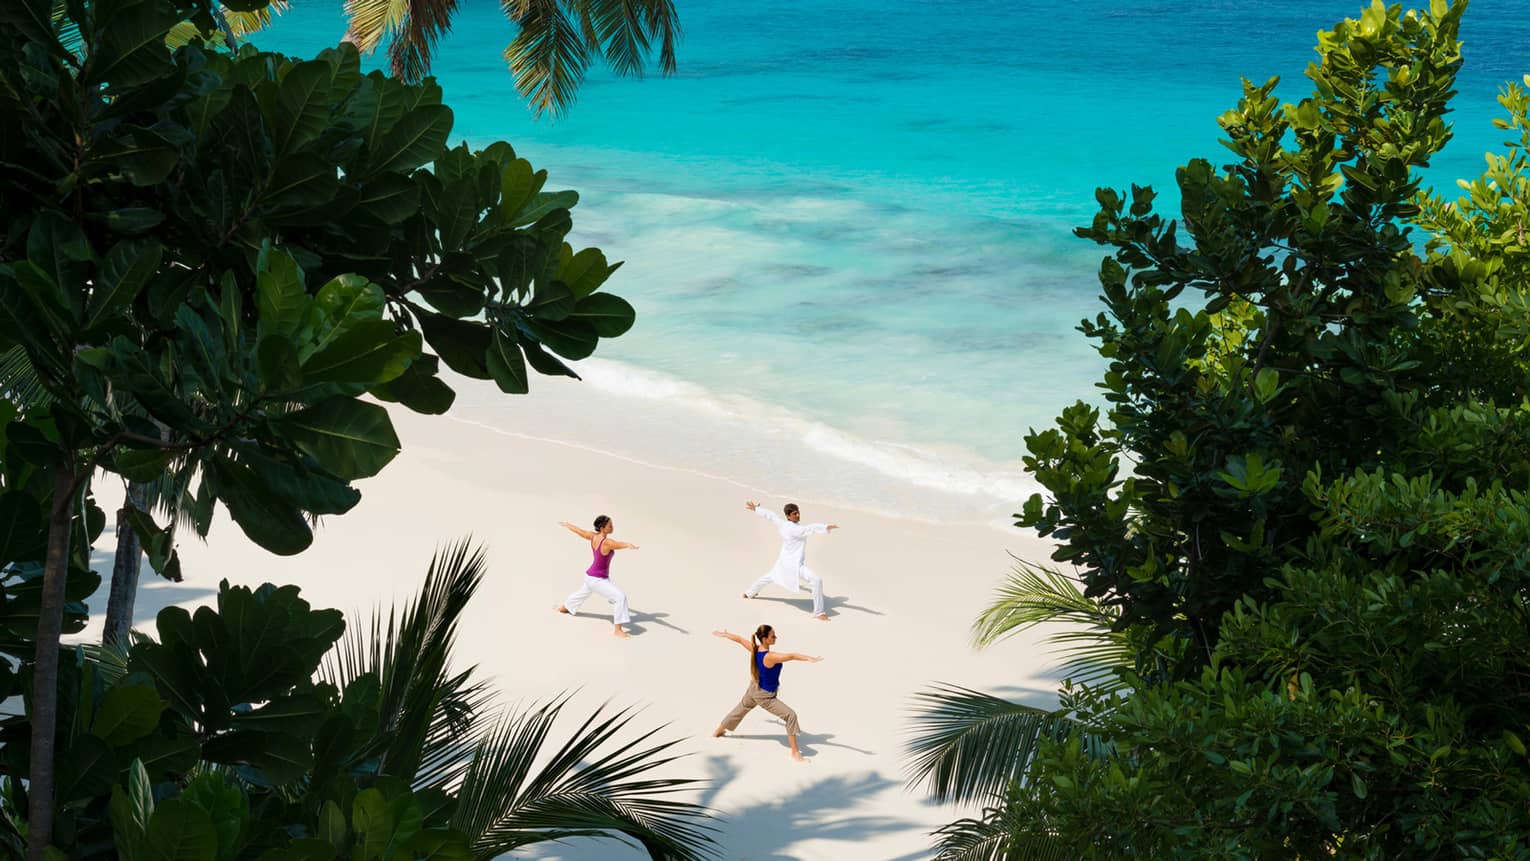 Aerial view of sandy beach through palm leaves where three people do yoga